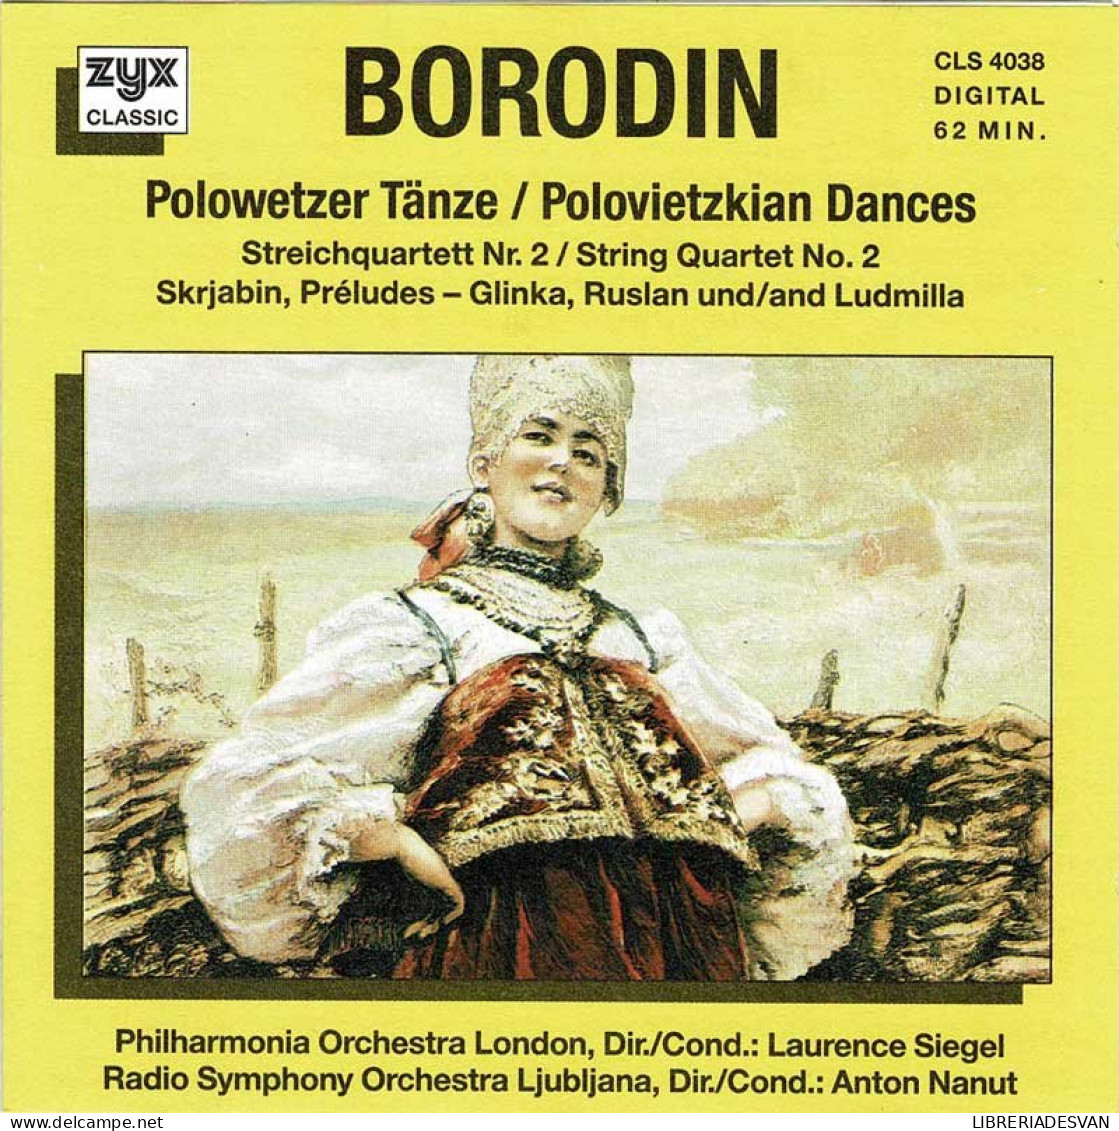 Borodin - Polovietzkian Dances. CD - Classical